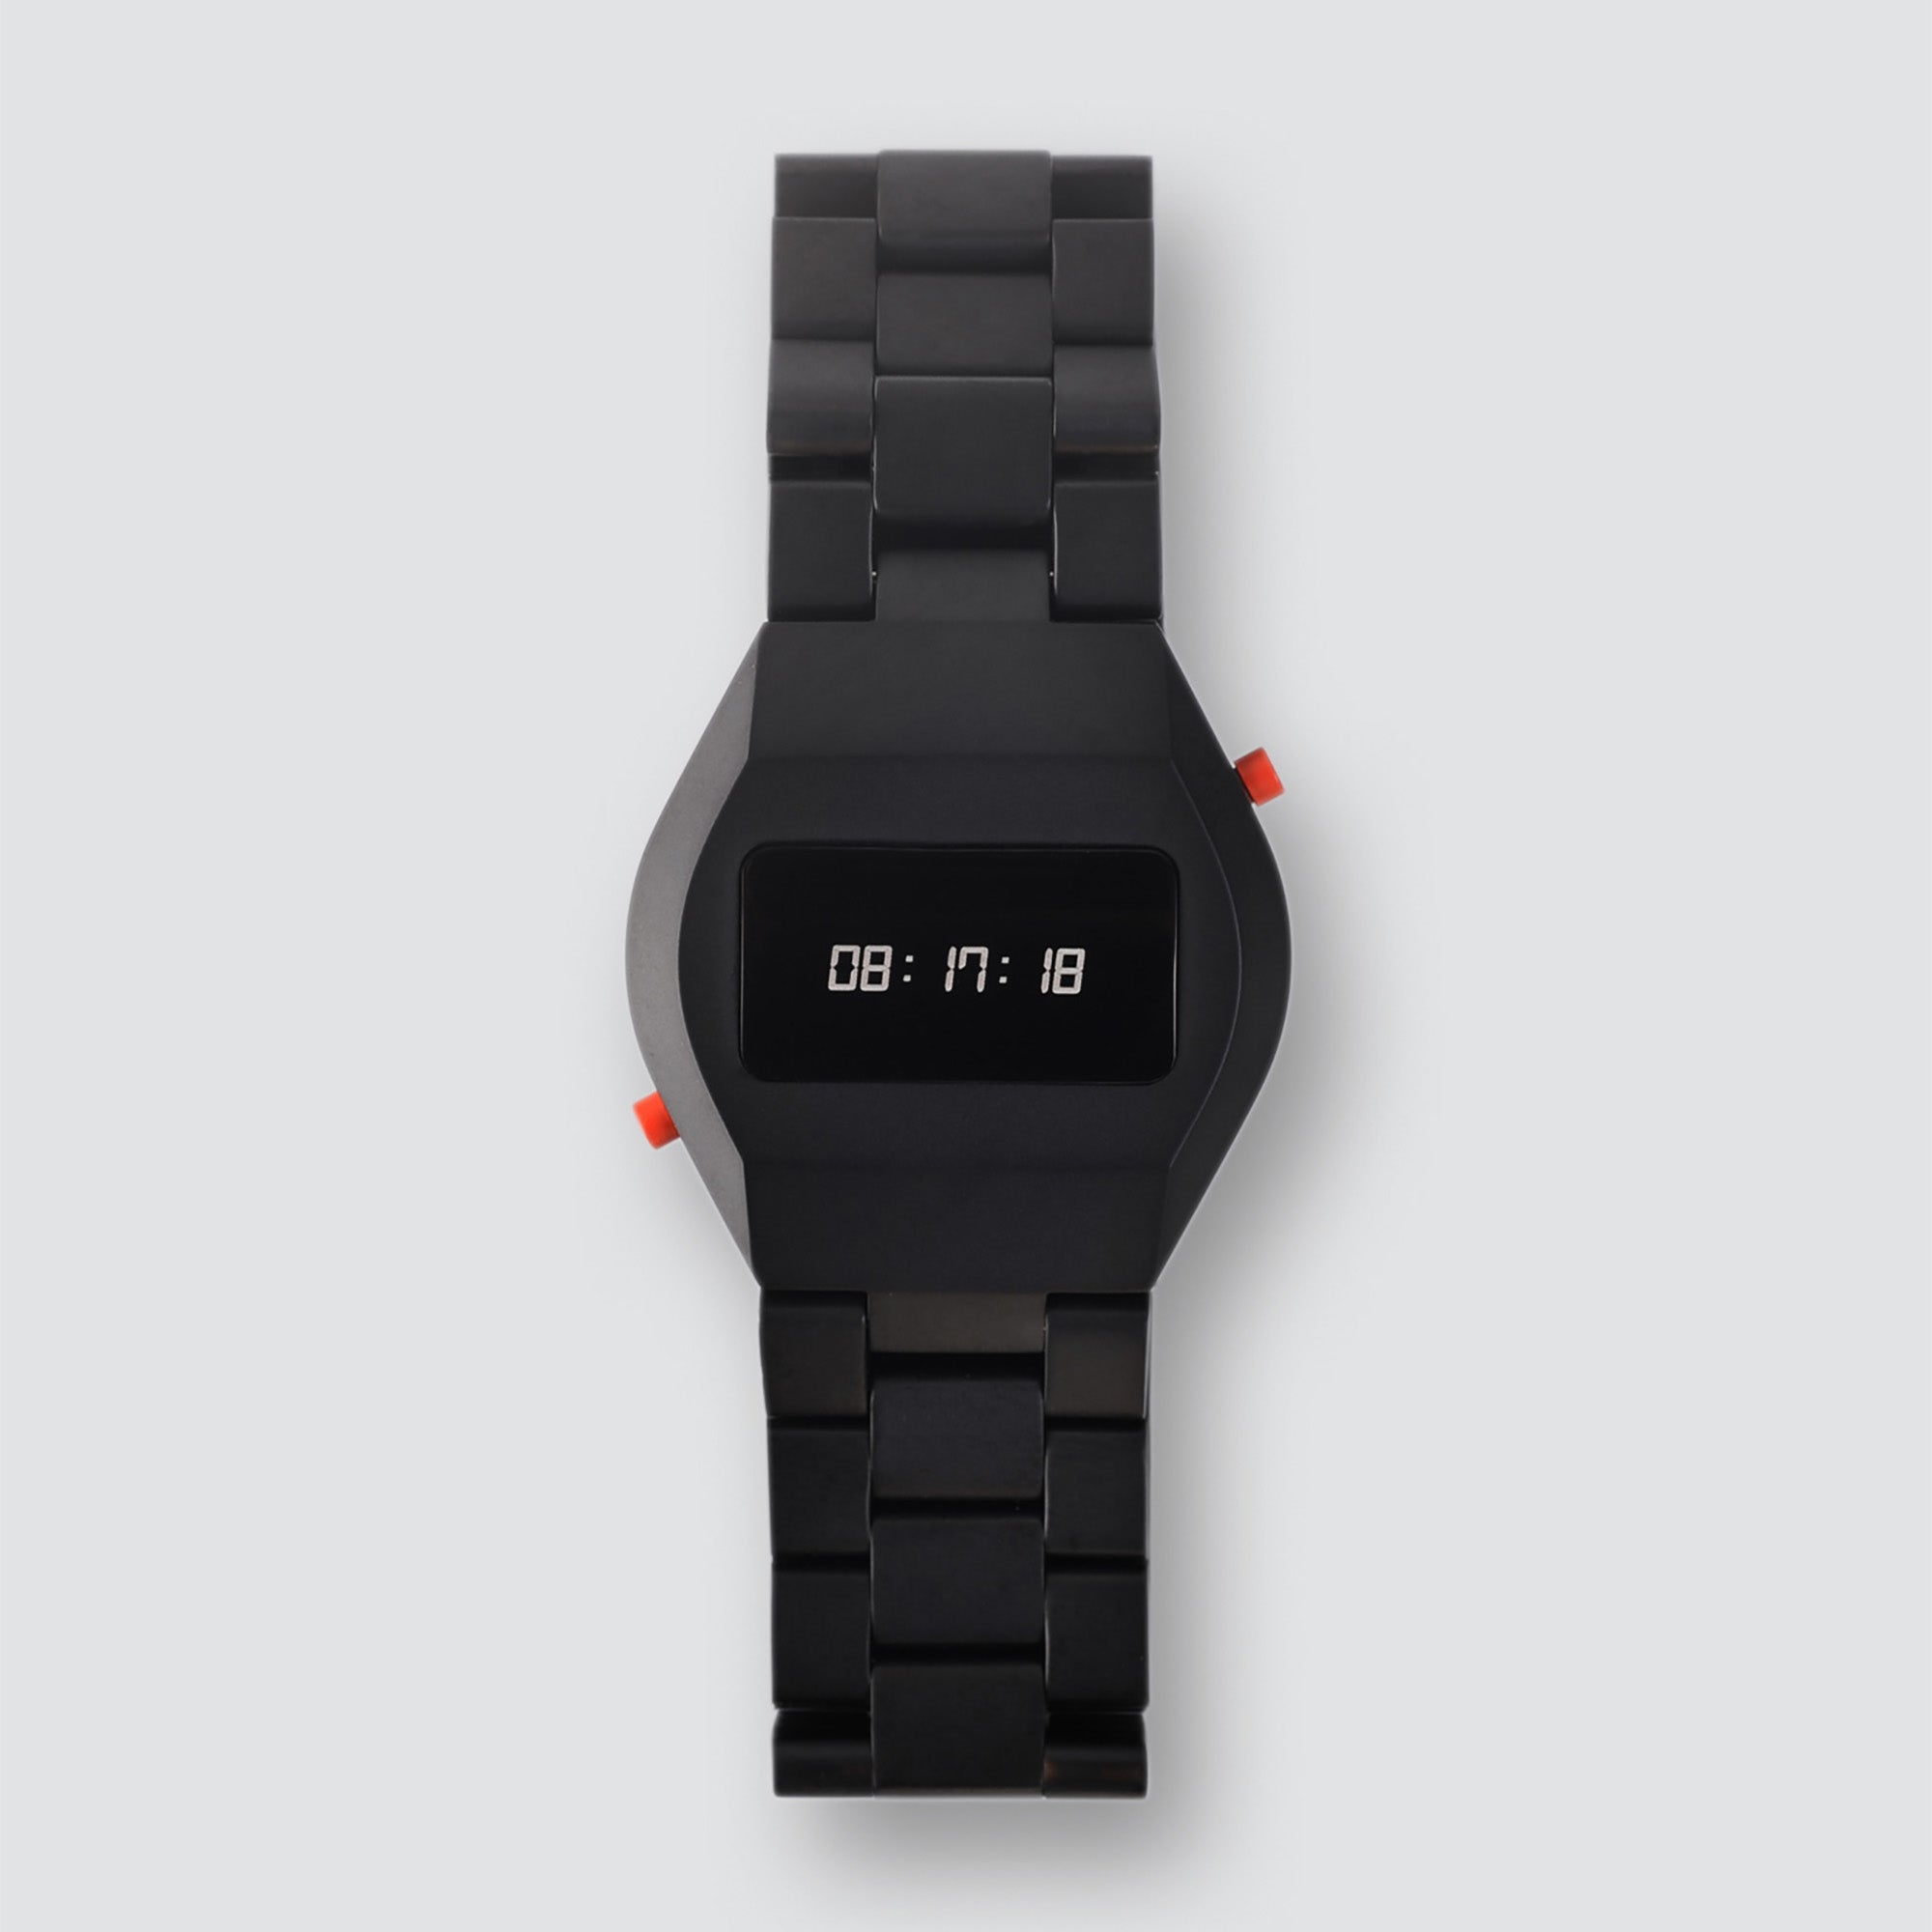 TIME:LESS:NESS - 1970 - The digital watch (Bracelet - Black)